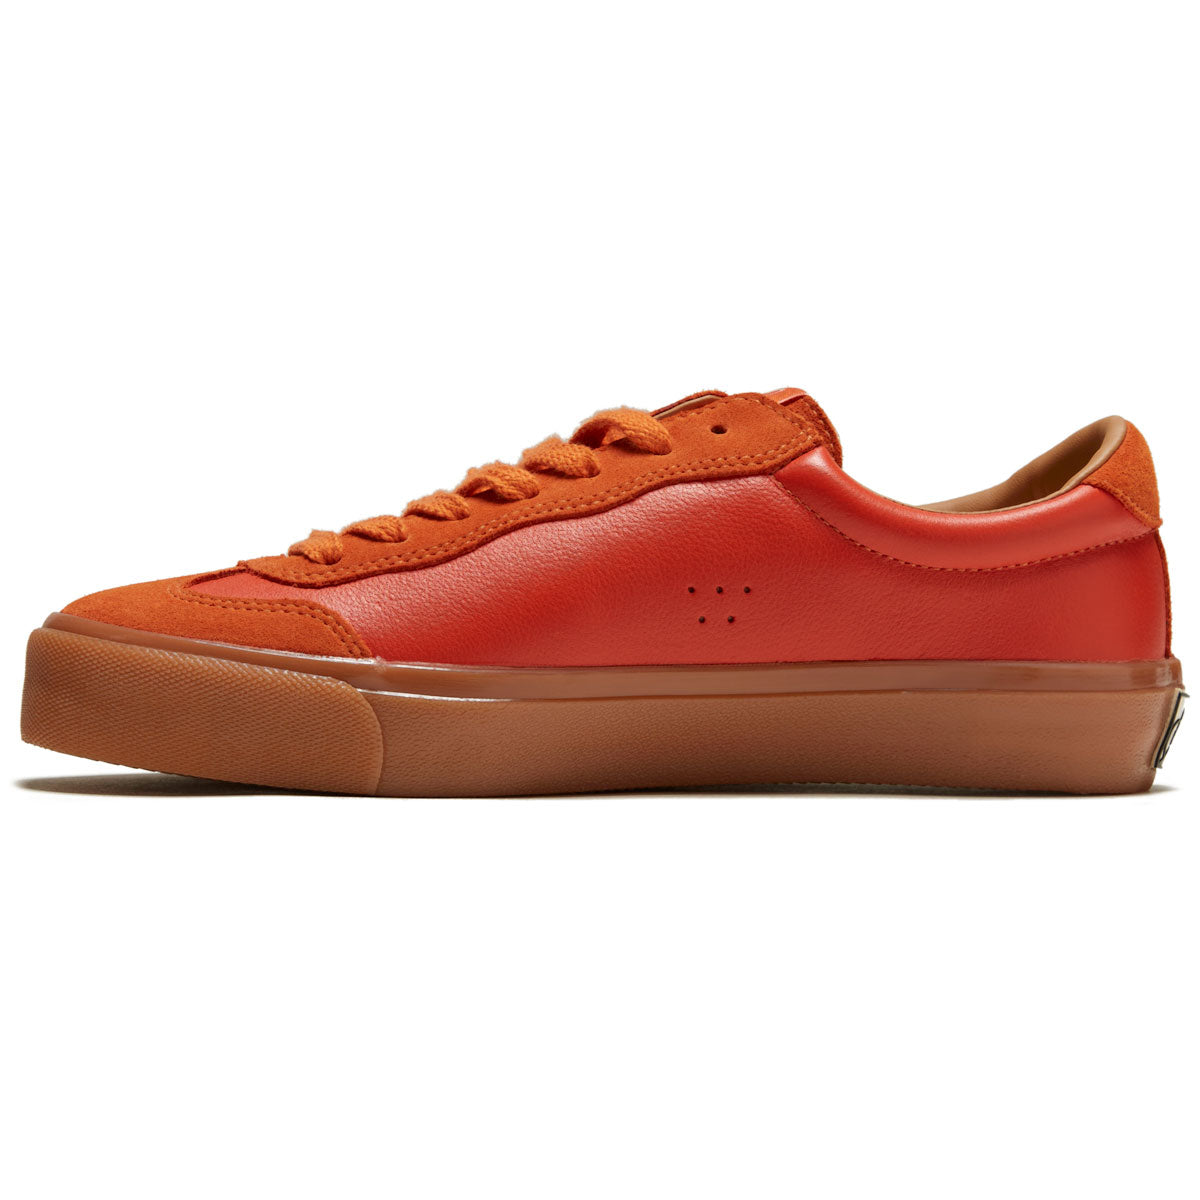 Last Resort AB VM004 Milic Leather Suede Low Shoes - Duo Orange/Gum image 2